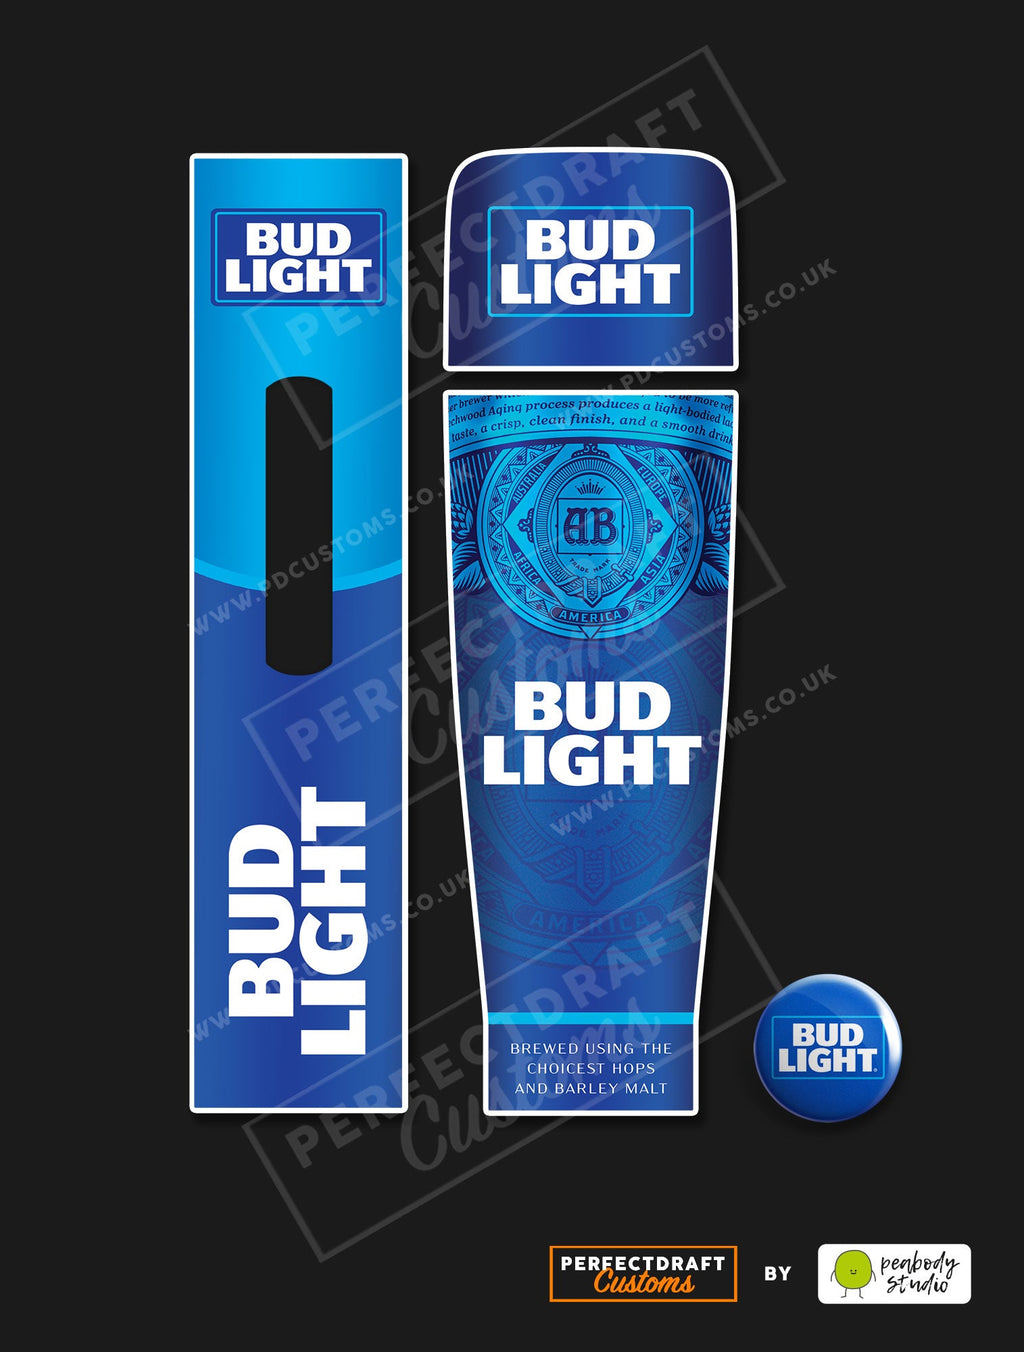 Bud Light Perfect Draft Skin